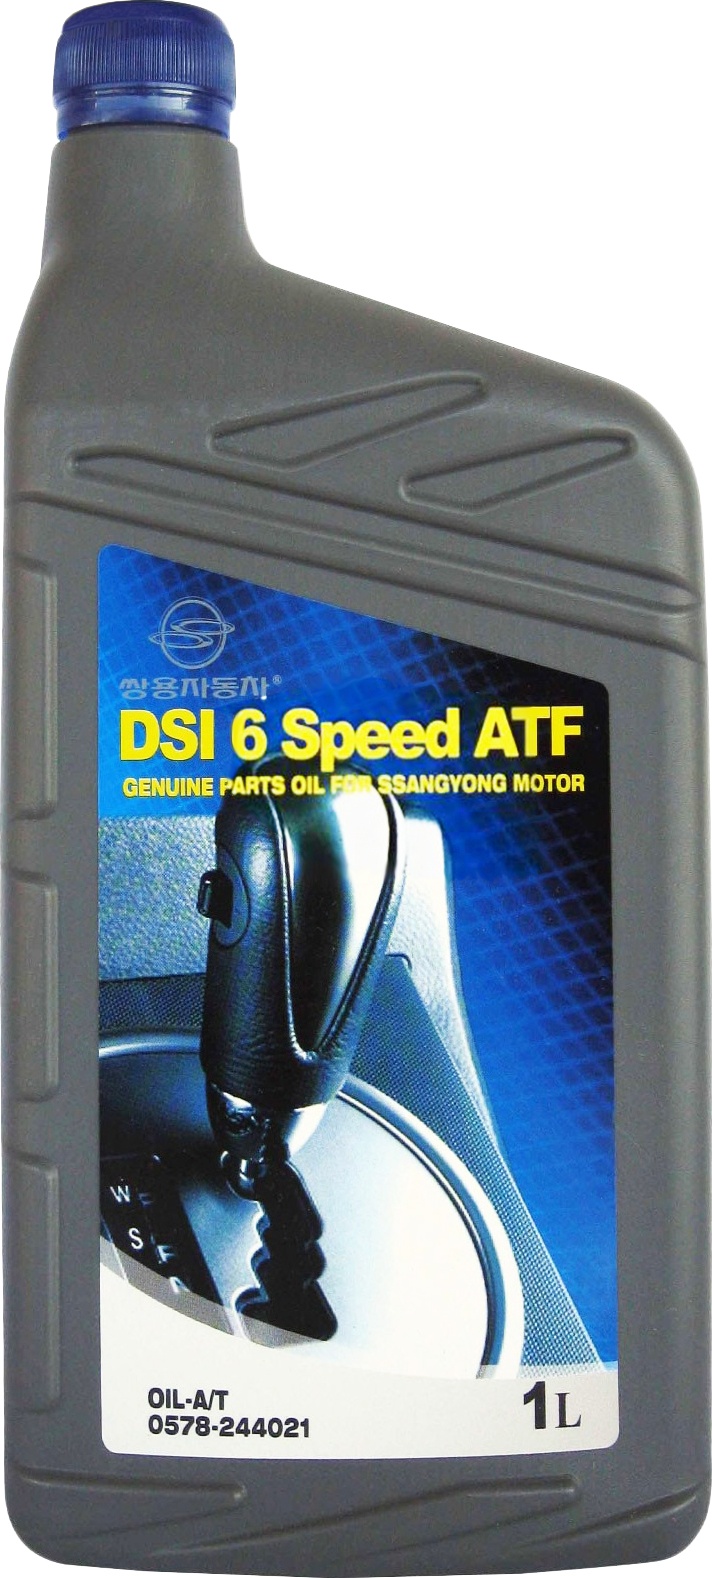 Масло санг йонг. SSANGYONG DSI 6 Speed ATF. SSANGYONG Speed ATF DSI 6 Oil-a/t. 6 Speed DSI масло. Масло 0578-244021.